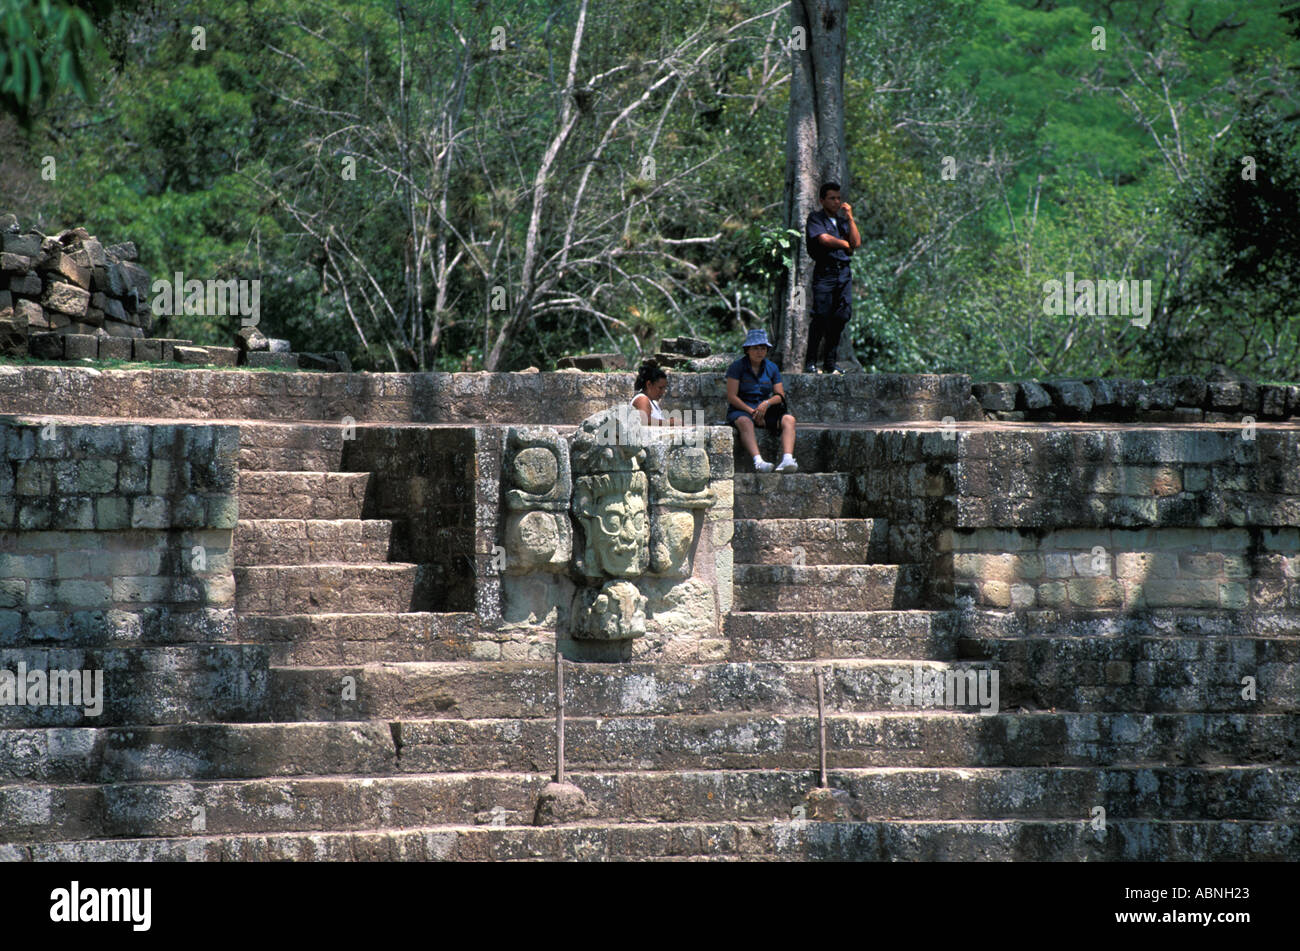 Honduras Copan Ruinas Maya ruins Mayan architecture tourists at the sculpture of the Venus God horizontal tourism travel Stock Photo